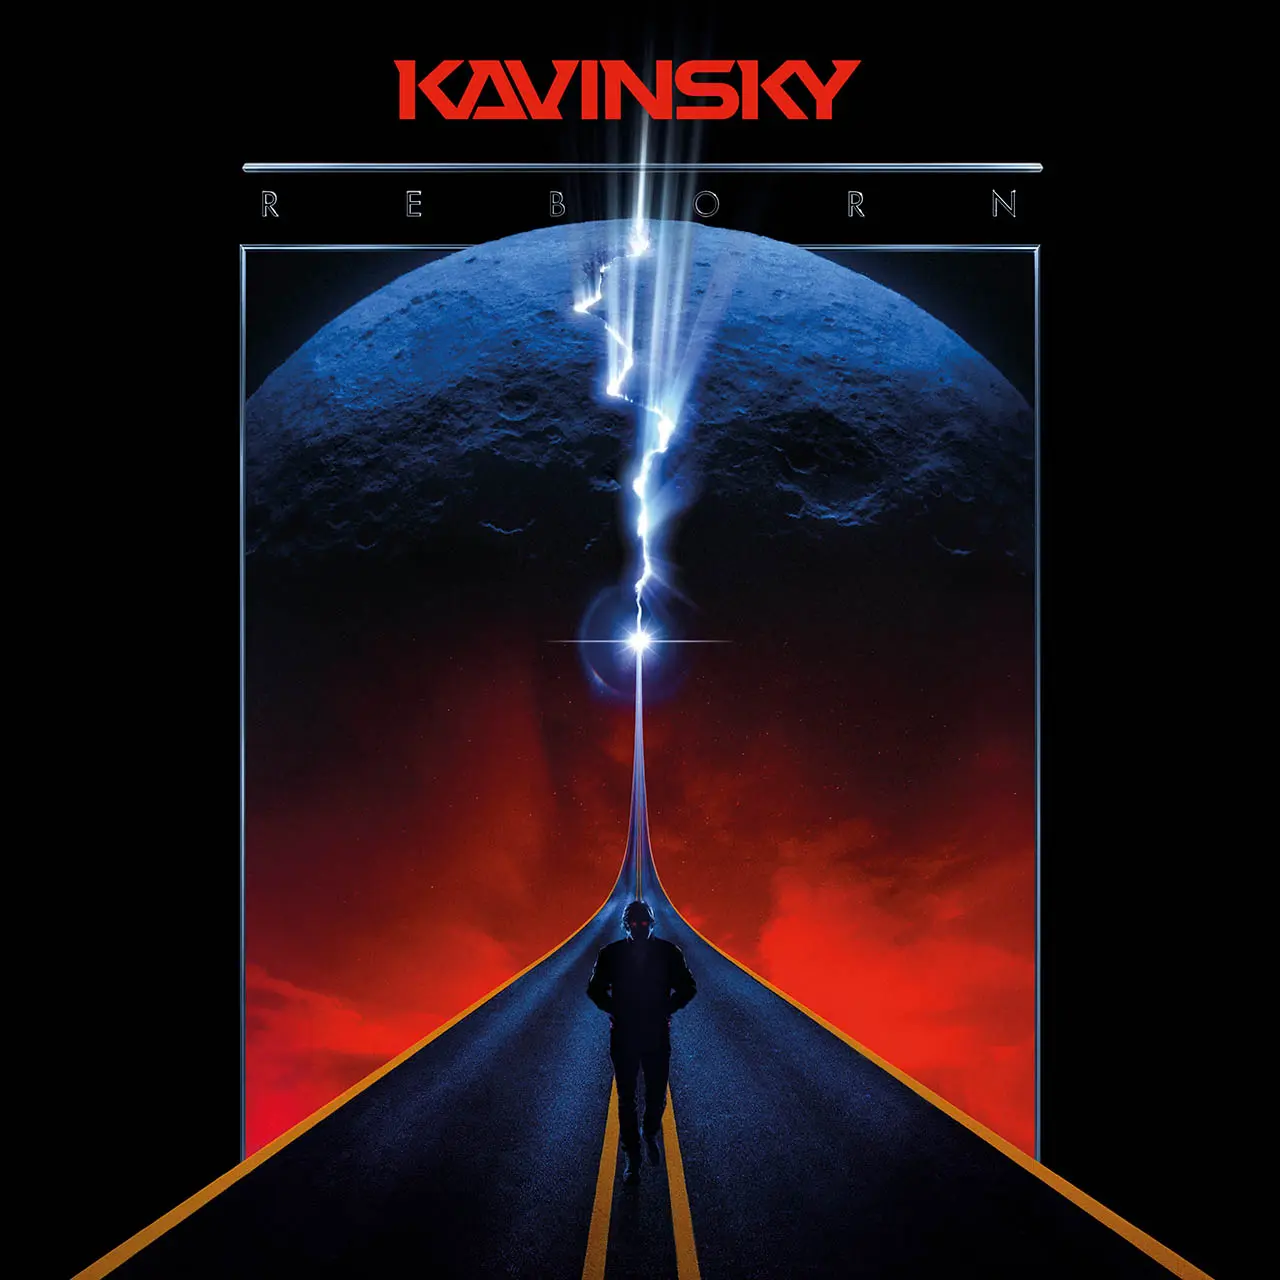 Kavinsky - Nightcall (Drive Original Movie Soundtrack) on Vimeo